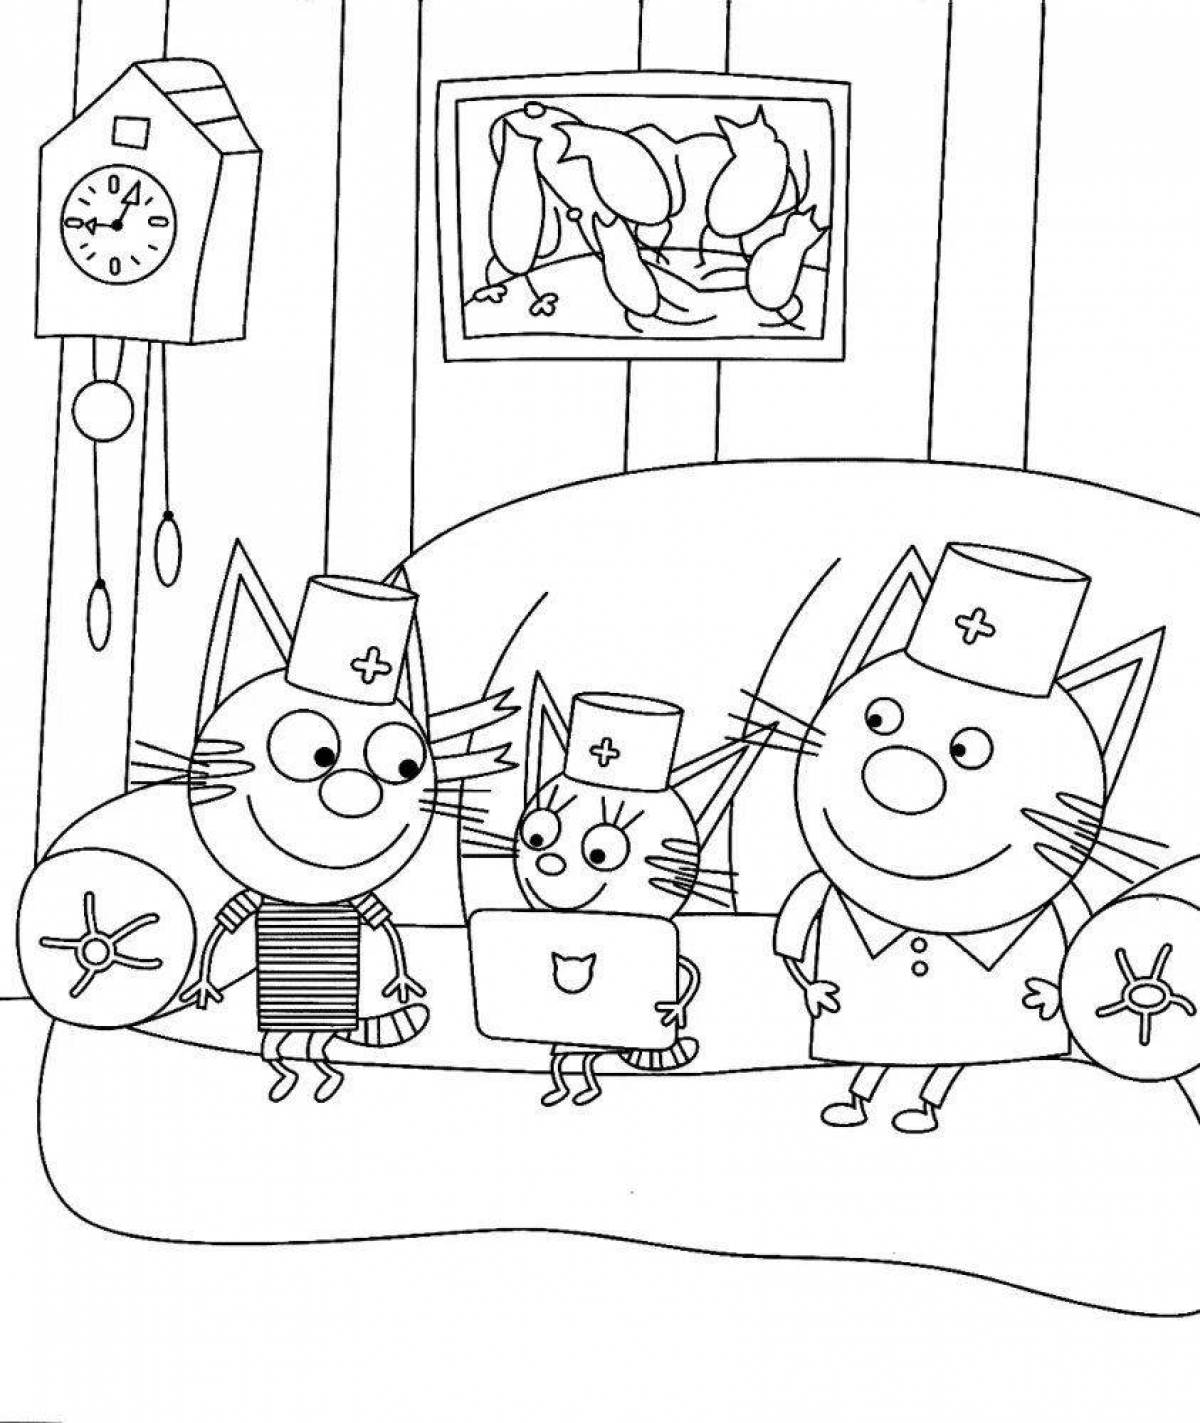 Funny cartoon three cats coloring book